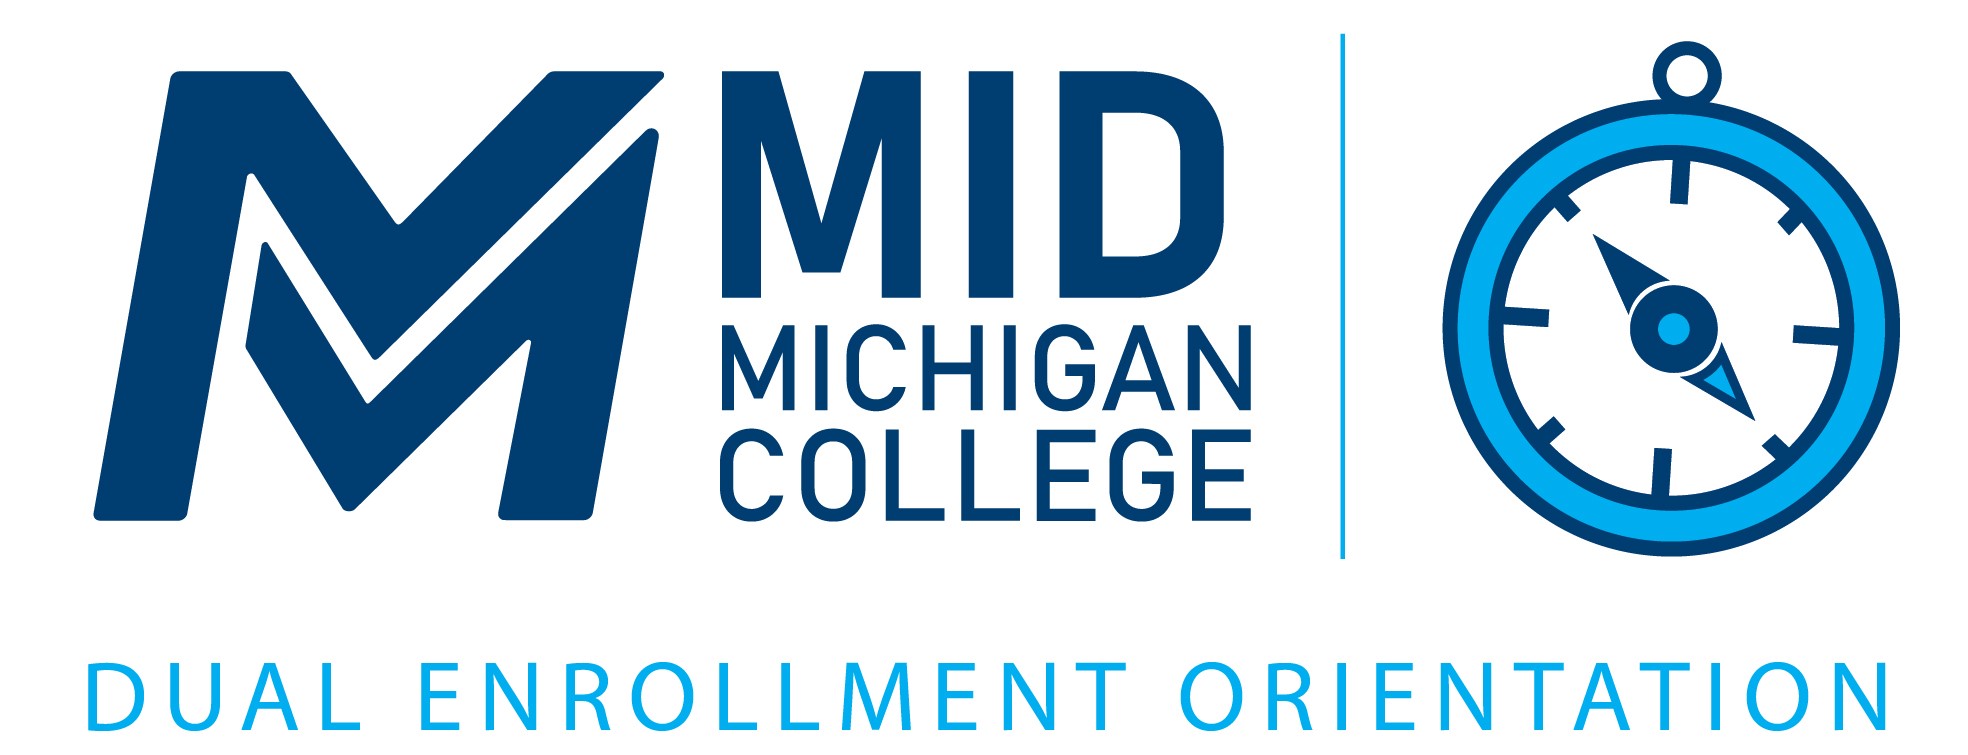 mid-michigan-college-dual-enroll-orientation-image.jpg